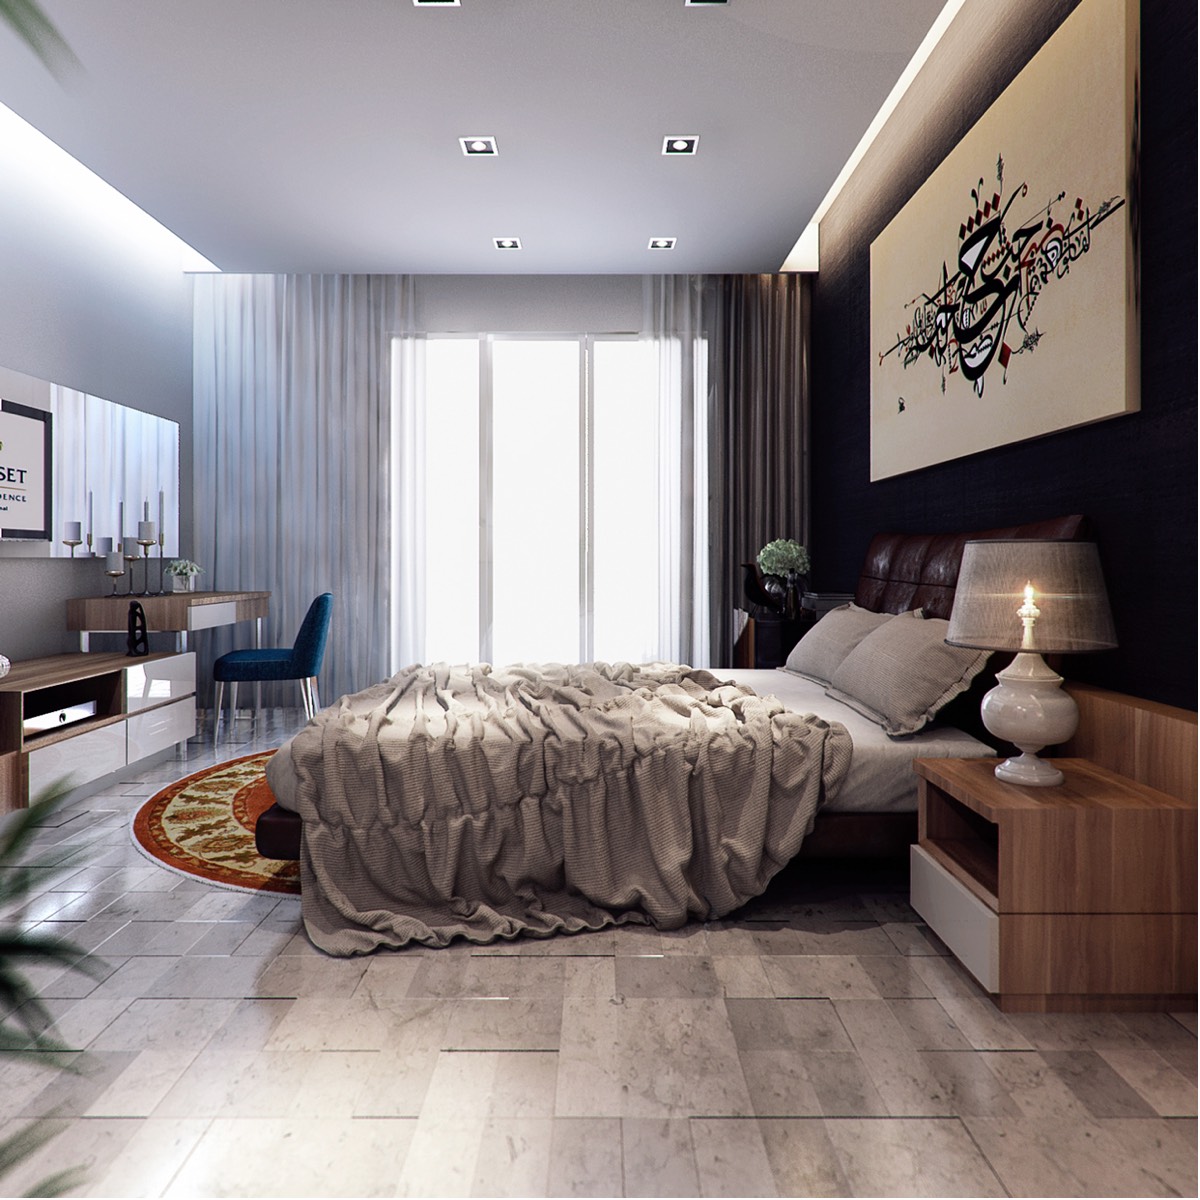 Creative bedroom design ideas "width =" 1200 "height =" 1200 "srcset =" https://mileray.com/wp-content/uploads/2020/05/1588511398_263_10-Luxury-Bedroom-Themes-and-Design-Ideas.jpg 1200w, https: // myfashionos .com /wp-content/uploads/2016/04/Projek-F-150x150.jpg 150w, https://mileray.com/wp-content/uploads/2016/04/Projek-F-300x300.jpg 300w, https : / /mileray.com/wp-content/uploads/2016/04/Projek-F-768x768.jpg 768w, https://mileray.com/wp-content/uploads/2016/04/Projek-F-1024x1024. jpg 1024w, https://mileray.com/wp-content/uploads/2016/04/Projek-F-696x696.jpg 696w, https://mileray.com/wp-content/uploads/2016/04/Projek- F- 1068x1068.jpg 1068w, https://mileray.com/wp-content/uploads/2016/04/Projek-F-420x420.jpg 420w "Sizes =" (maximum width: 1200px) 100vw, 1200px